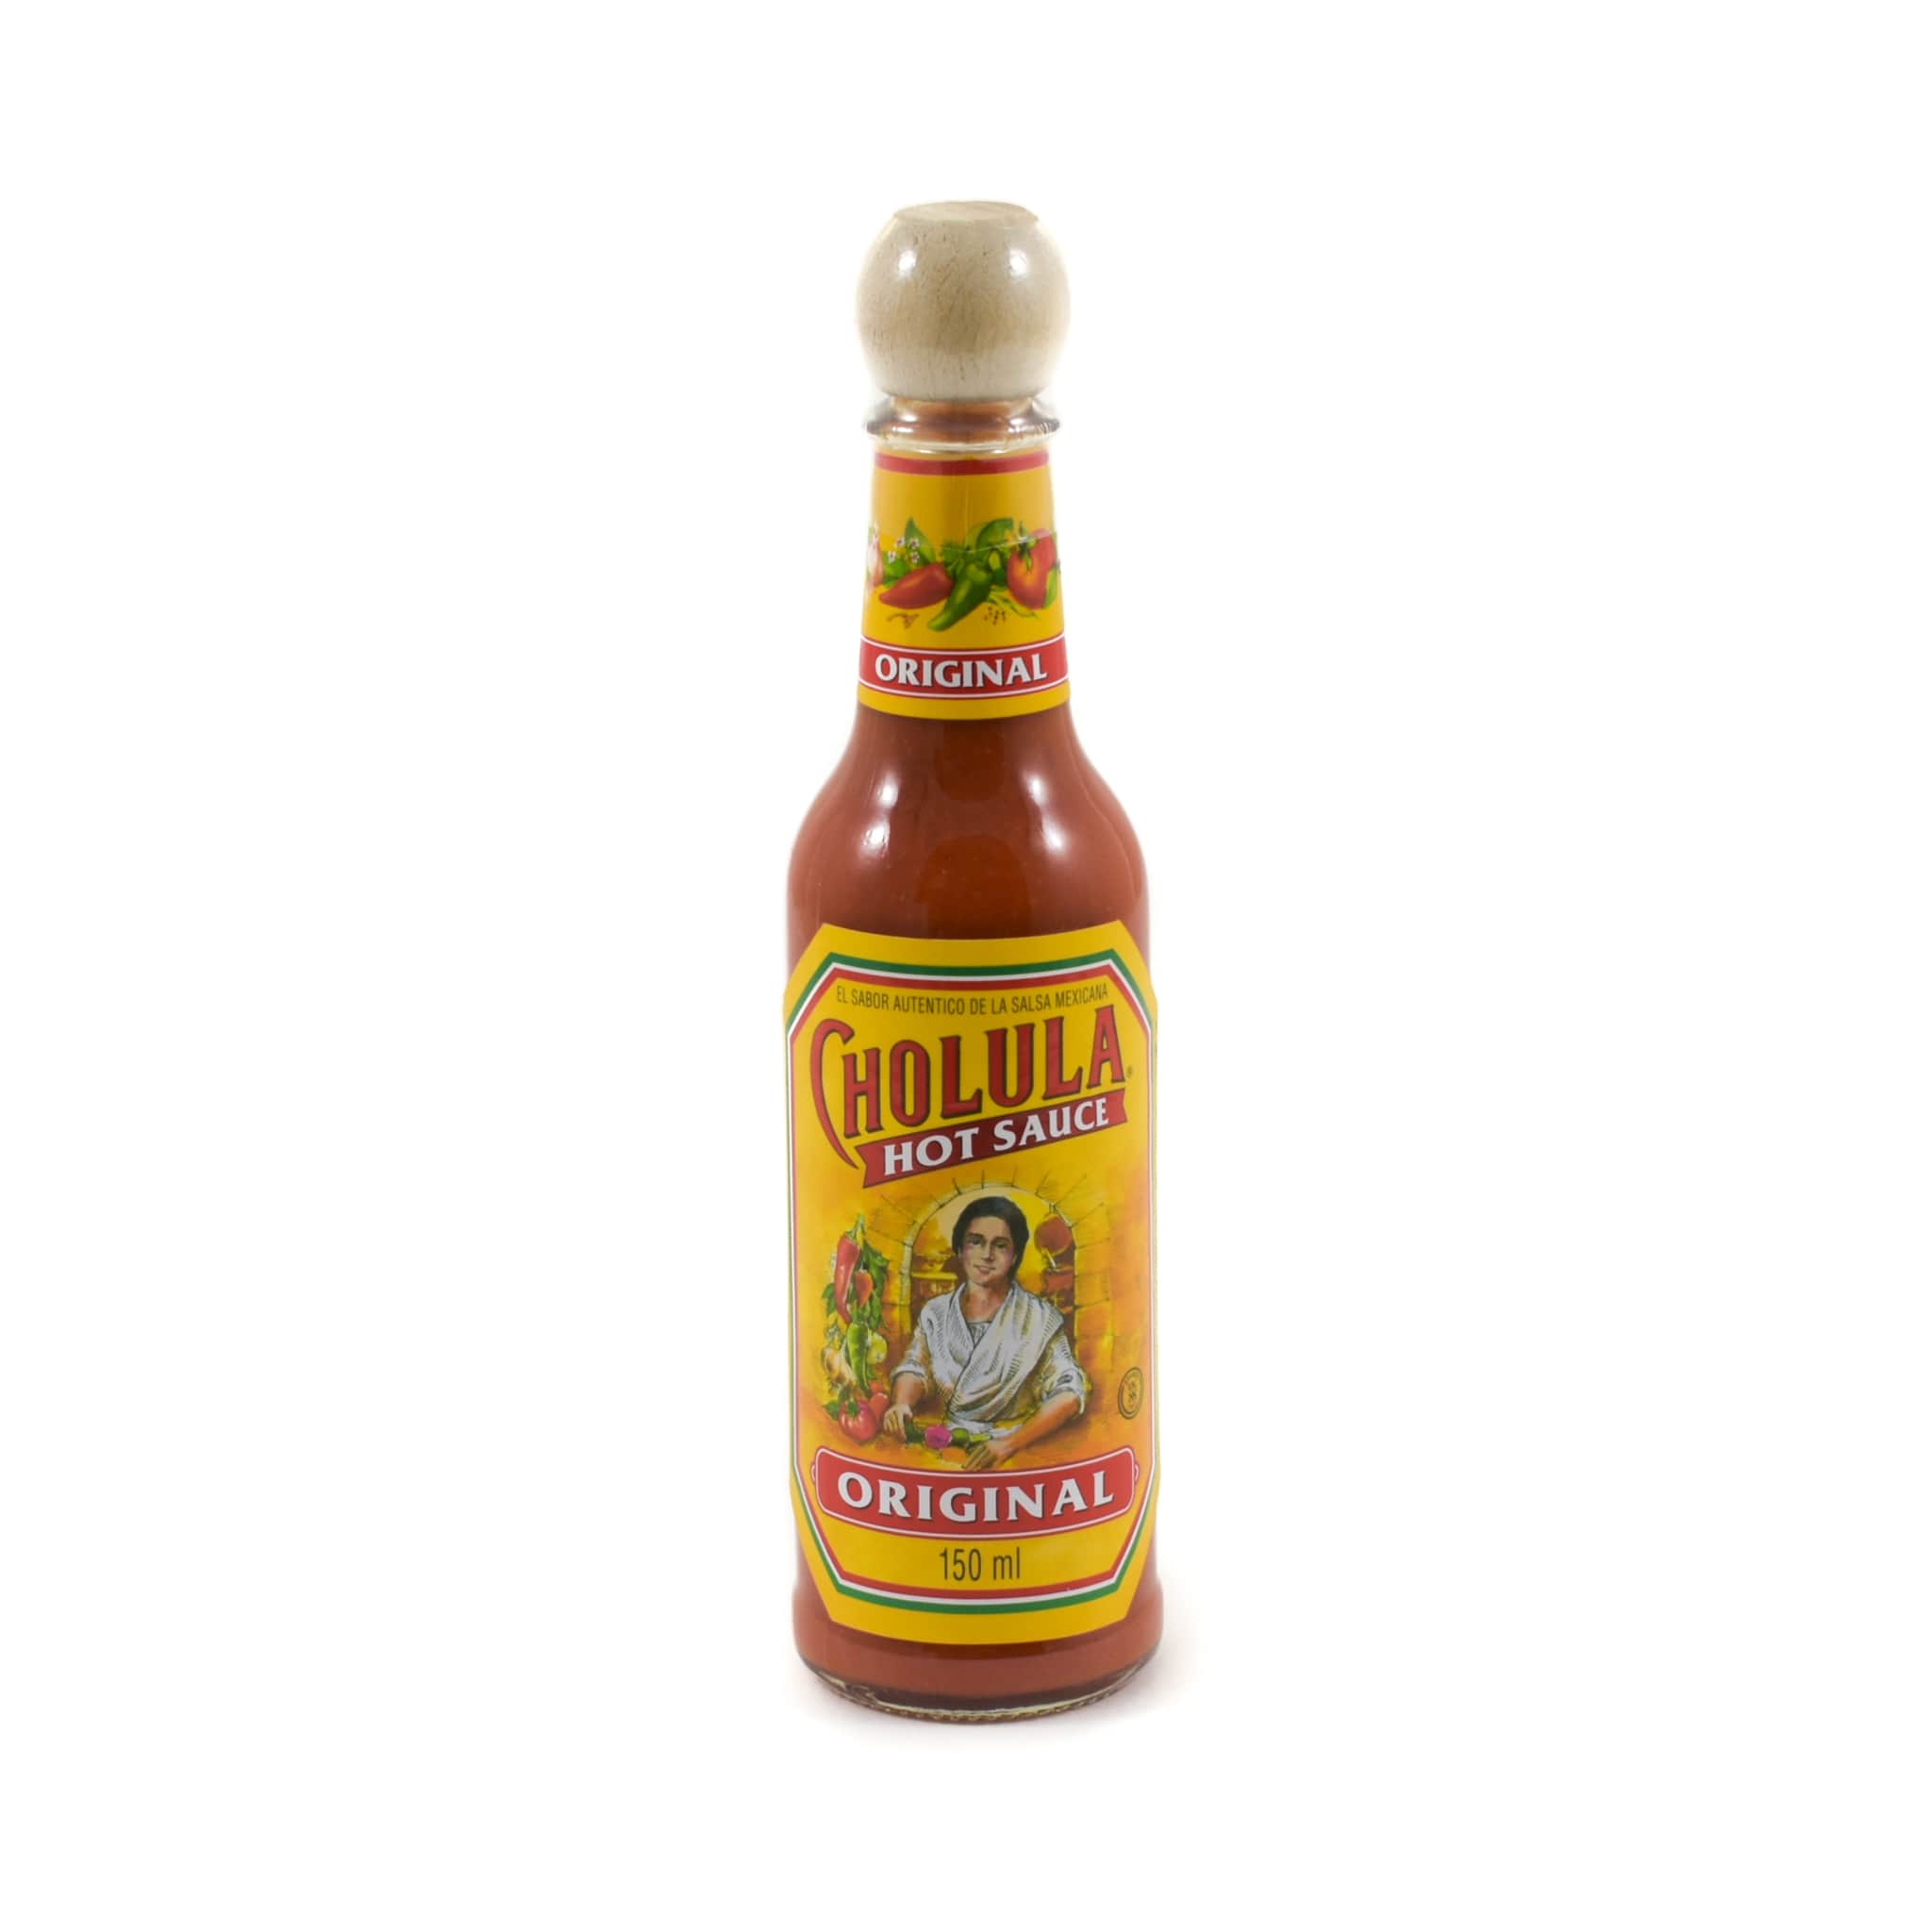 Cholula Original Hot Sauce 150ml Mexican Food and Cooking